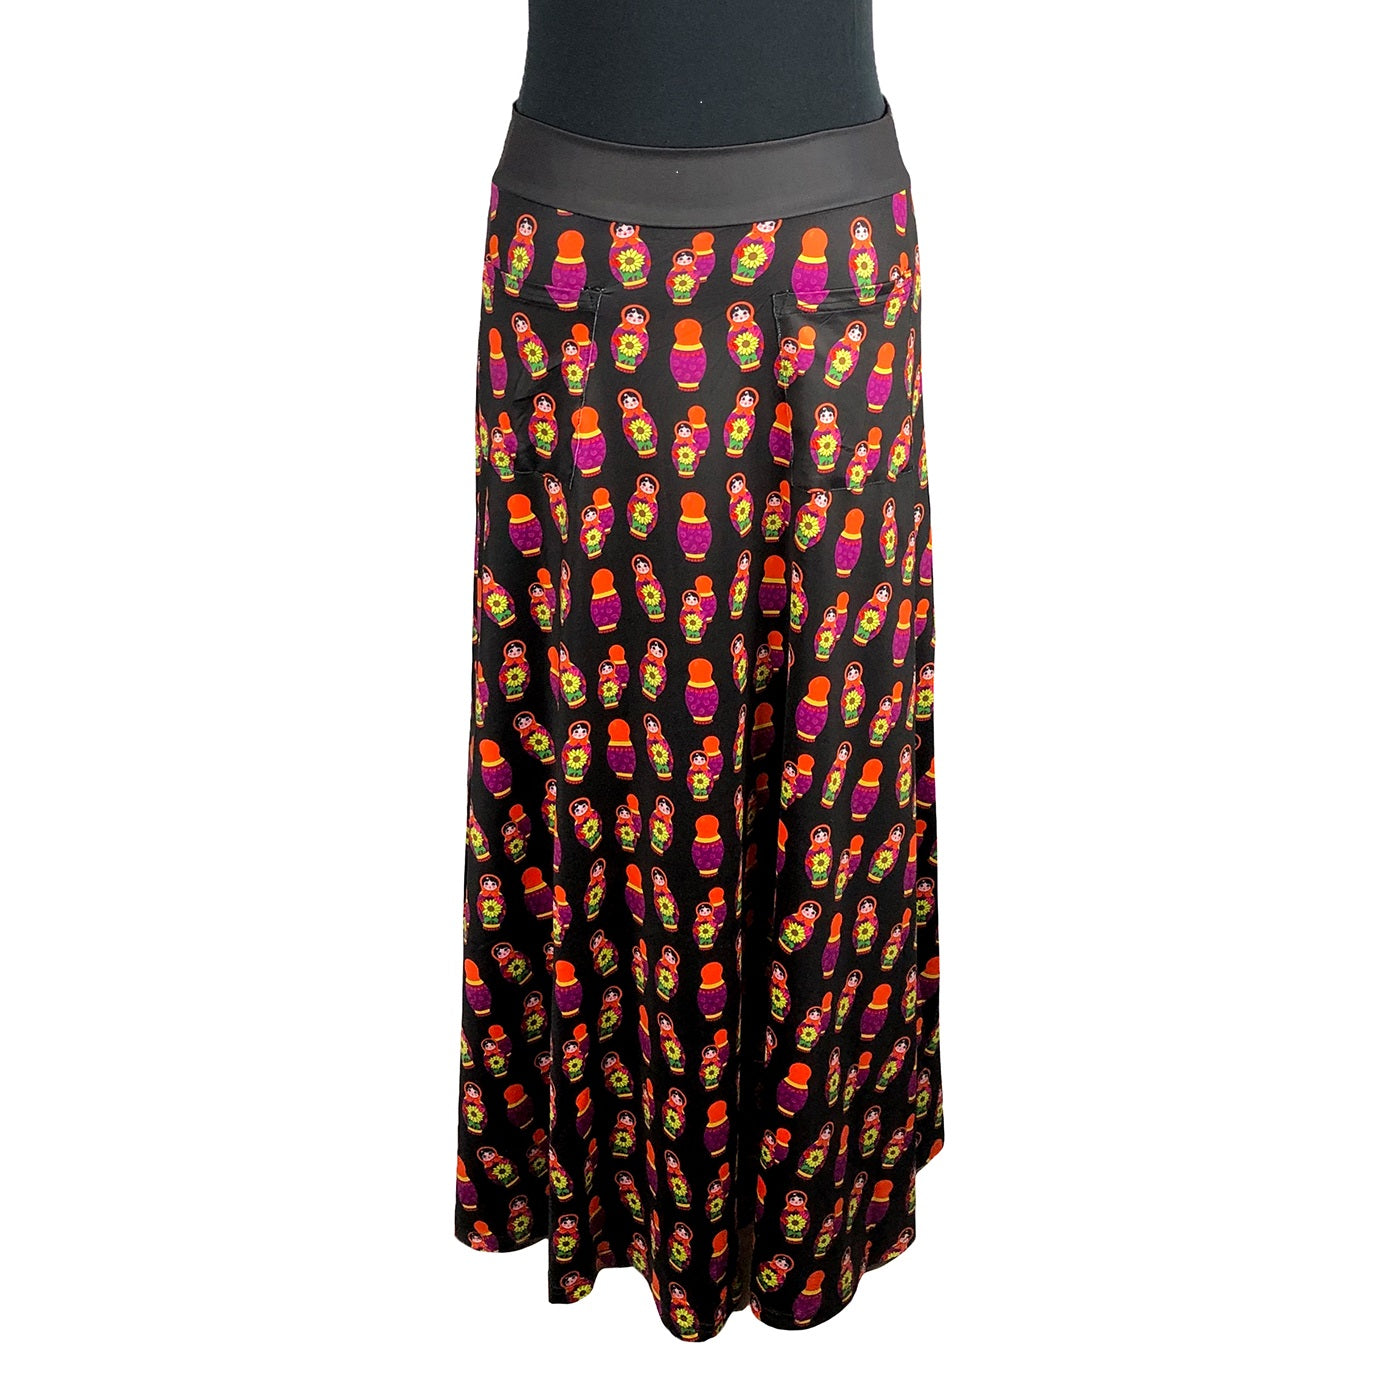 Babette Maxi Skirt by RainbowsAndFairies.com.au (Nesting Dolls - Matryoshka - Babushka - Skirt With Pockets - Boho - Mod Retro - Vintage Inspired) - SKU: CL_MAXIS_BABET_ORG - Pic-01